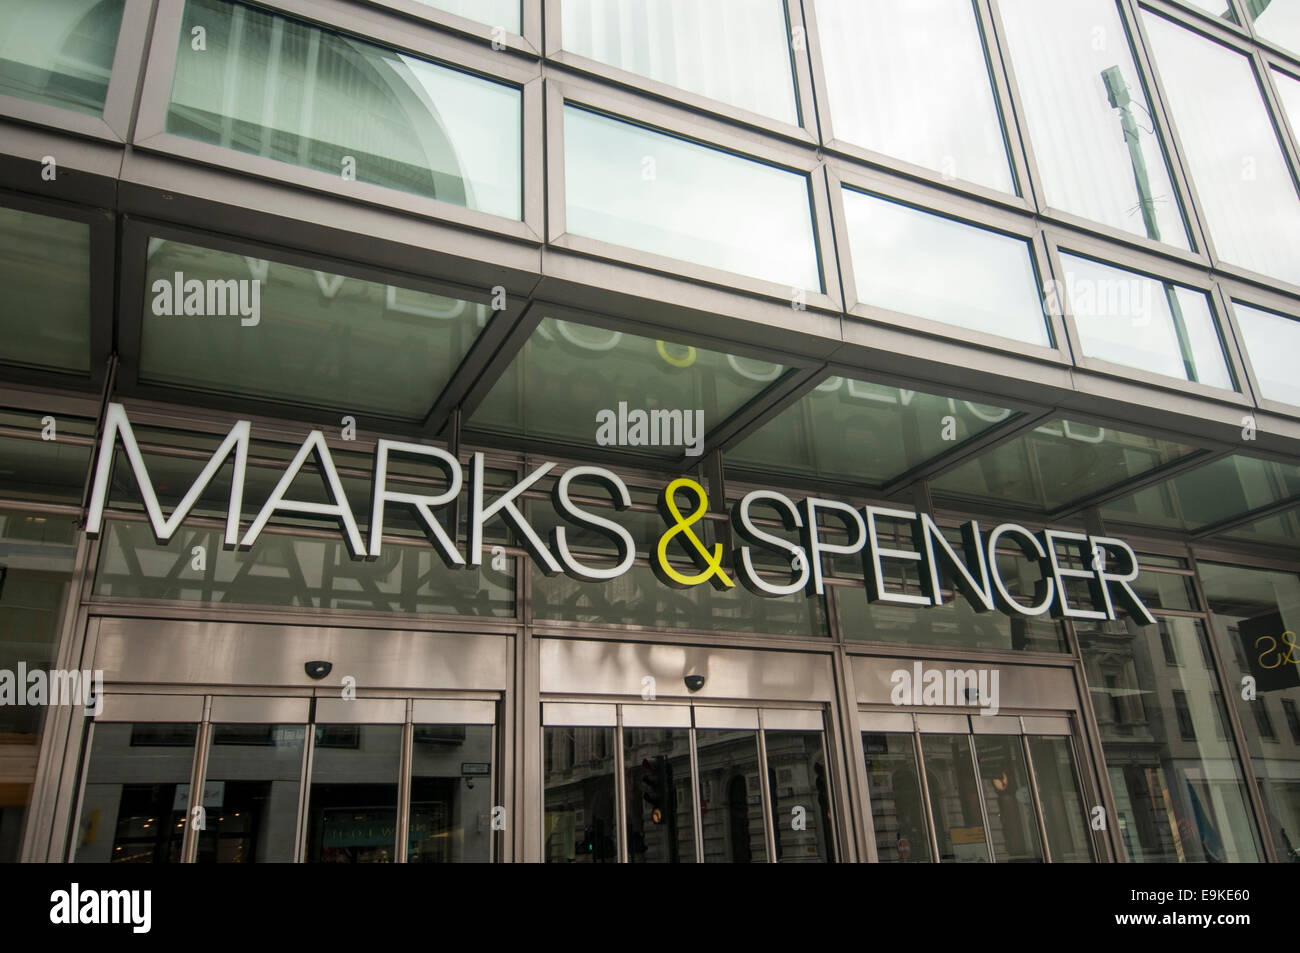 Marks & Spencer shop front logo Stock Photo